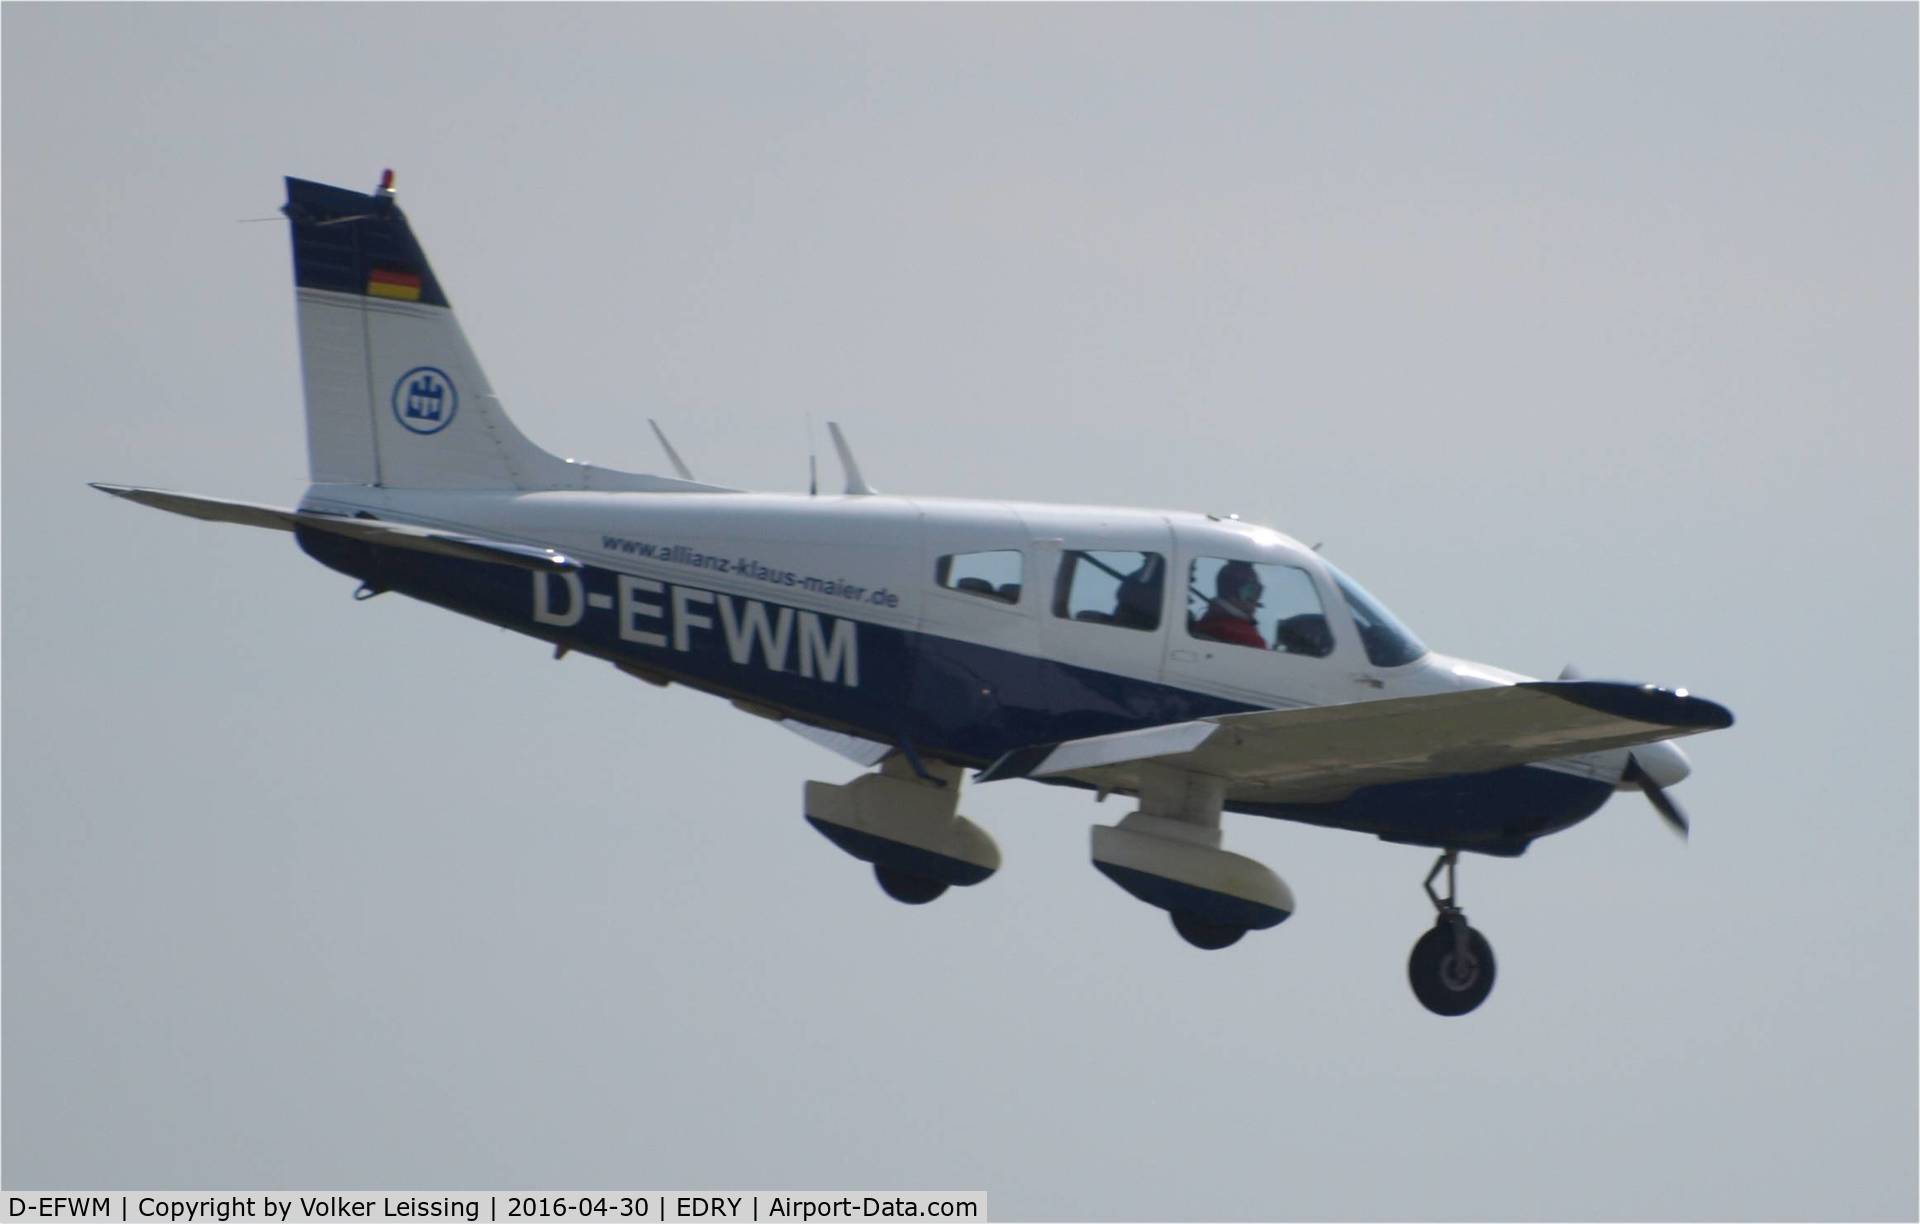 D-EFWM, 1977 Piper PA-28-181 Cherokee Archer II C/N 28-7790419, landing